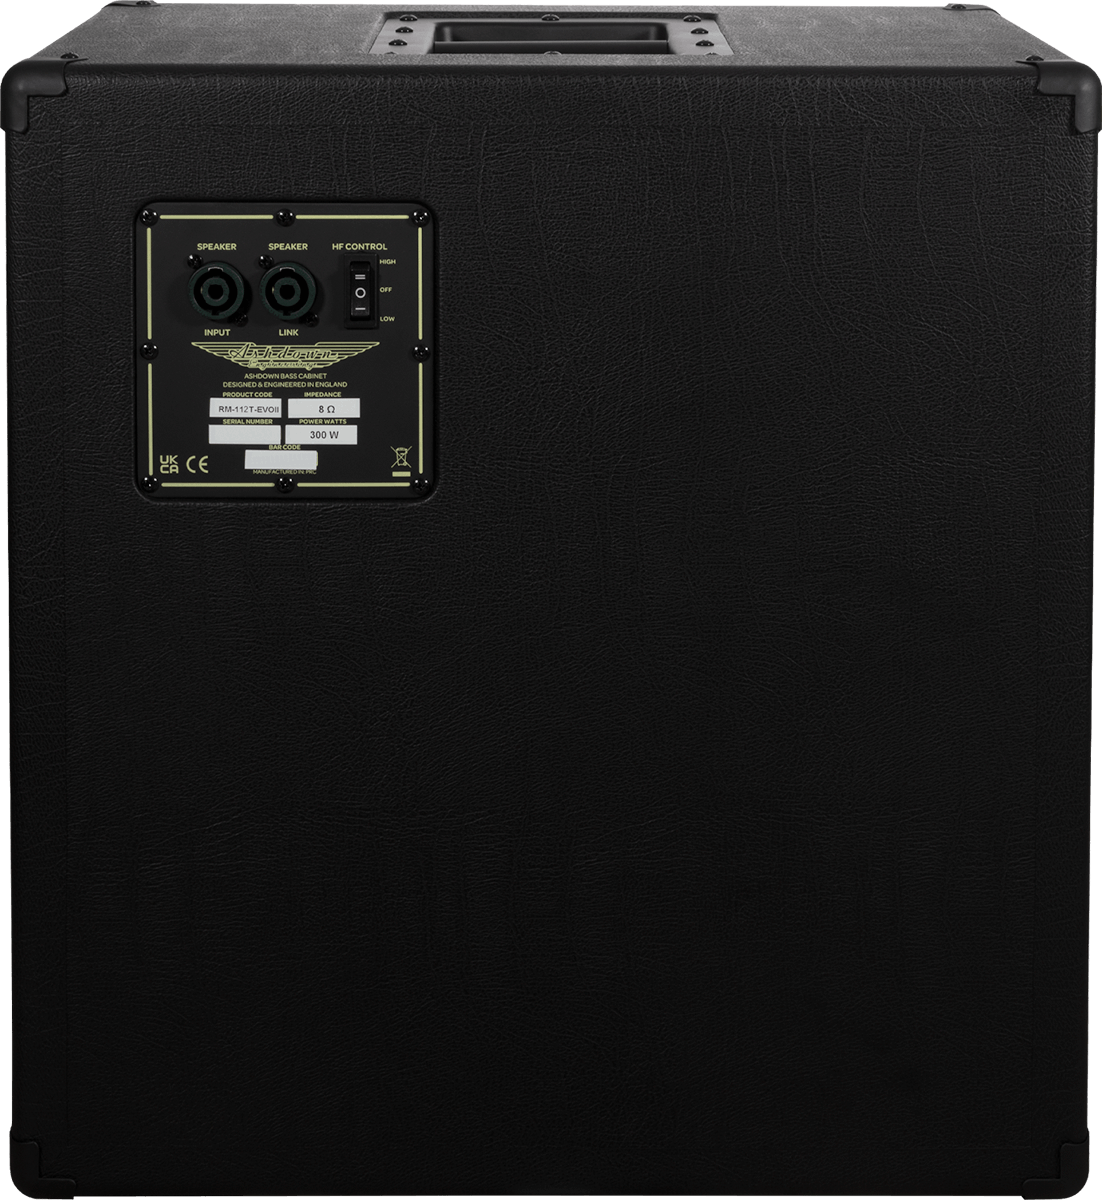 Ashdown Rm-112 1x12 300w 8 Ohms - Bass amp cabinet - Variation 1